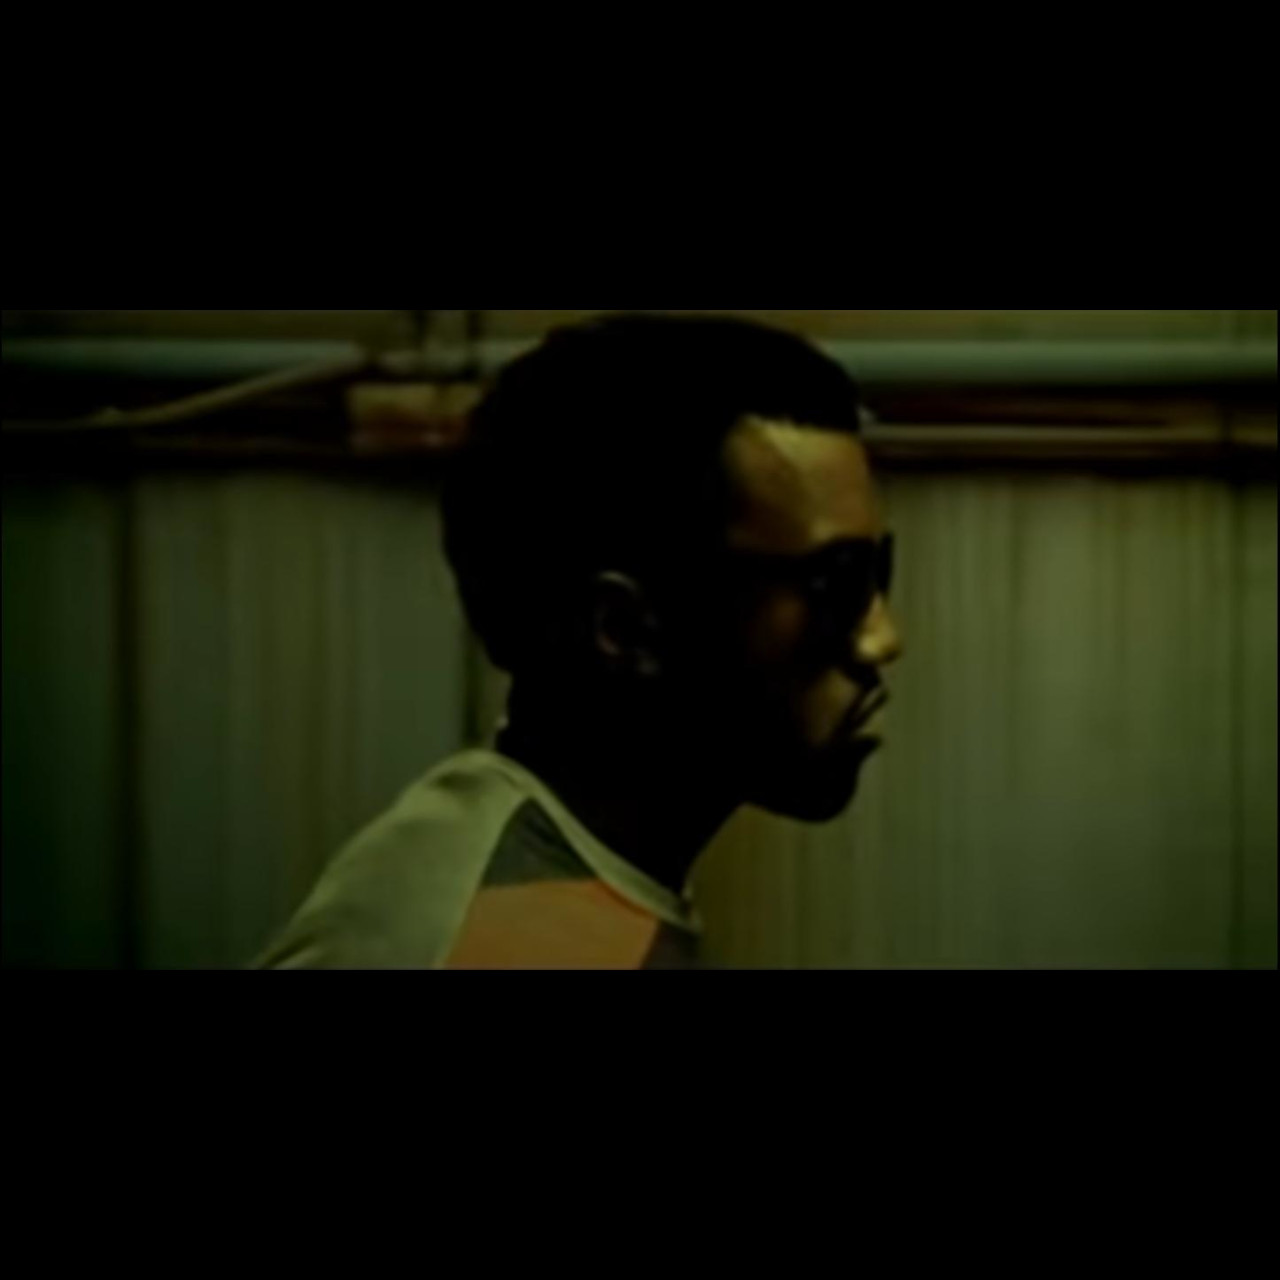 Kanye West - Welcome To Heartbreak (ft. Kid Cudi) (Thumbnail)